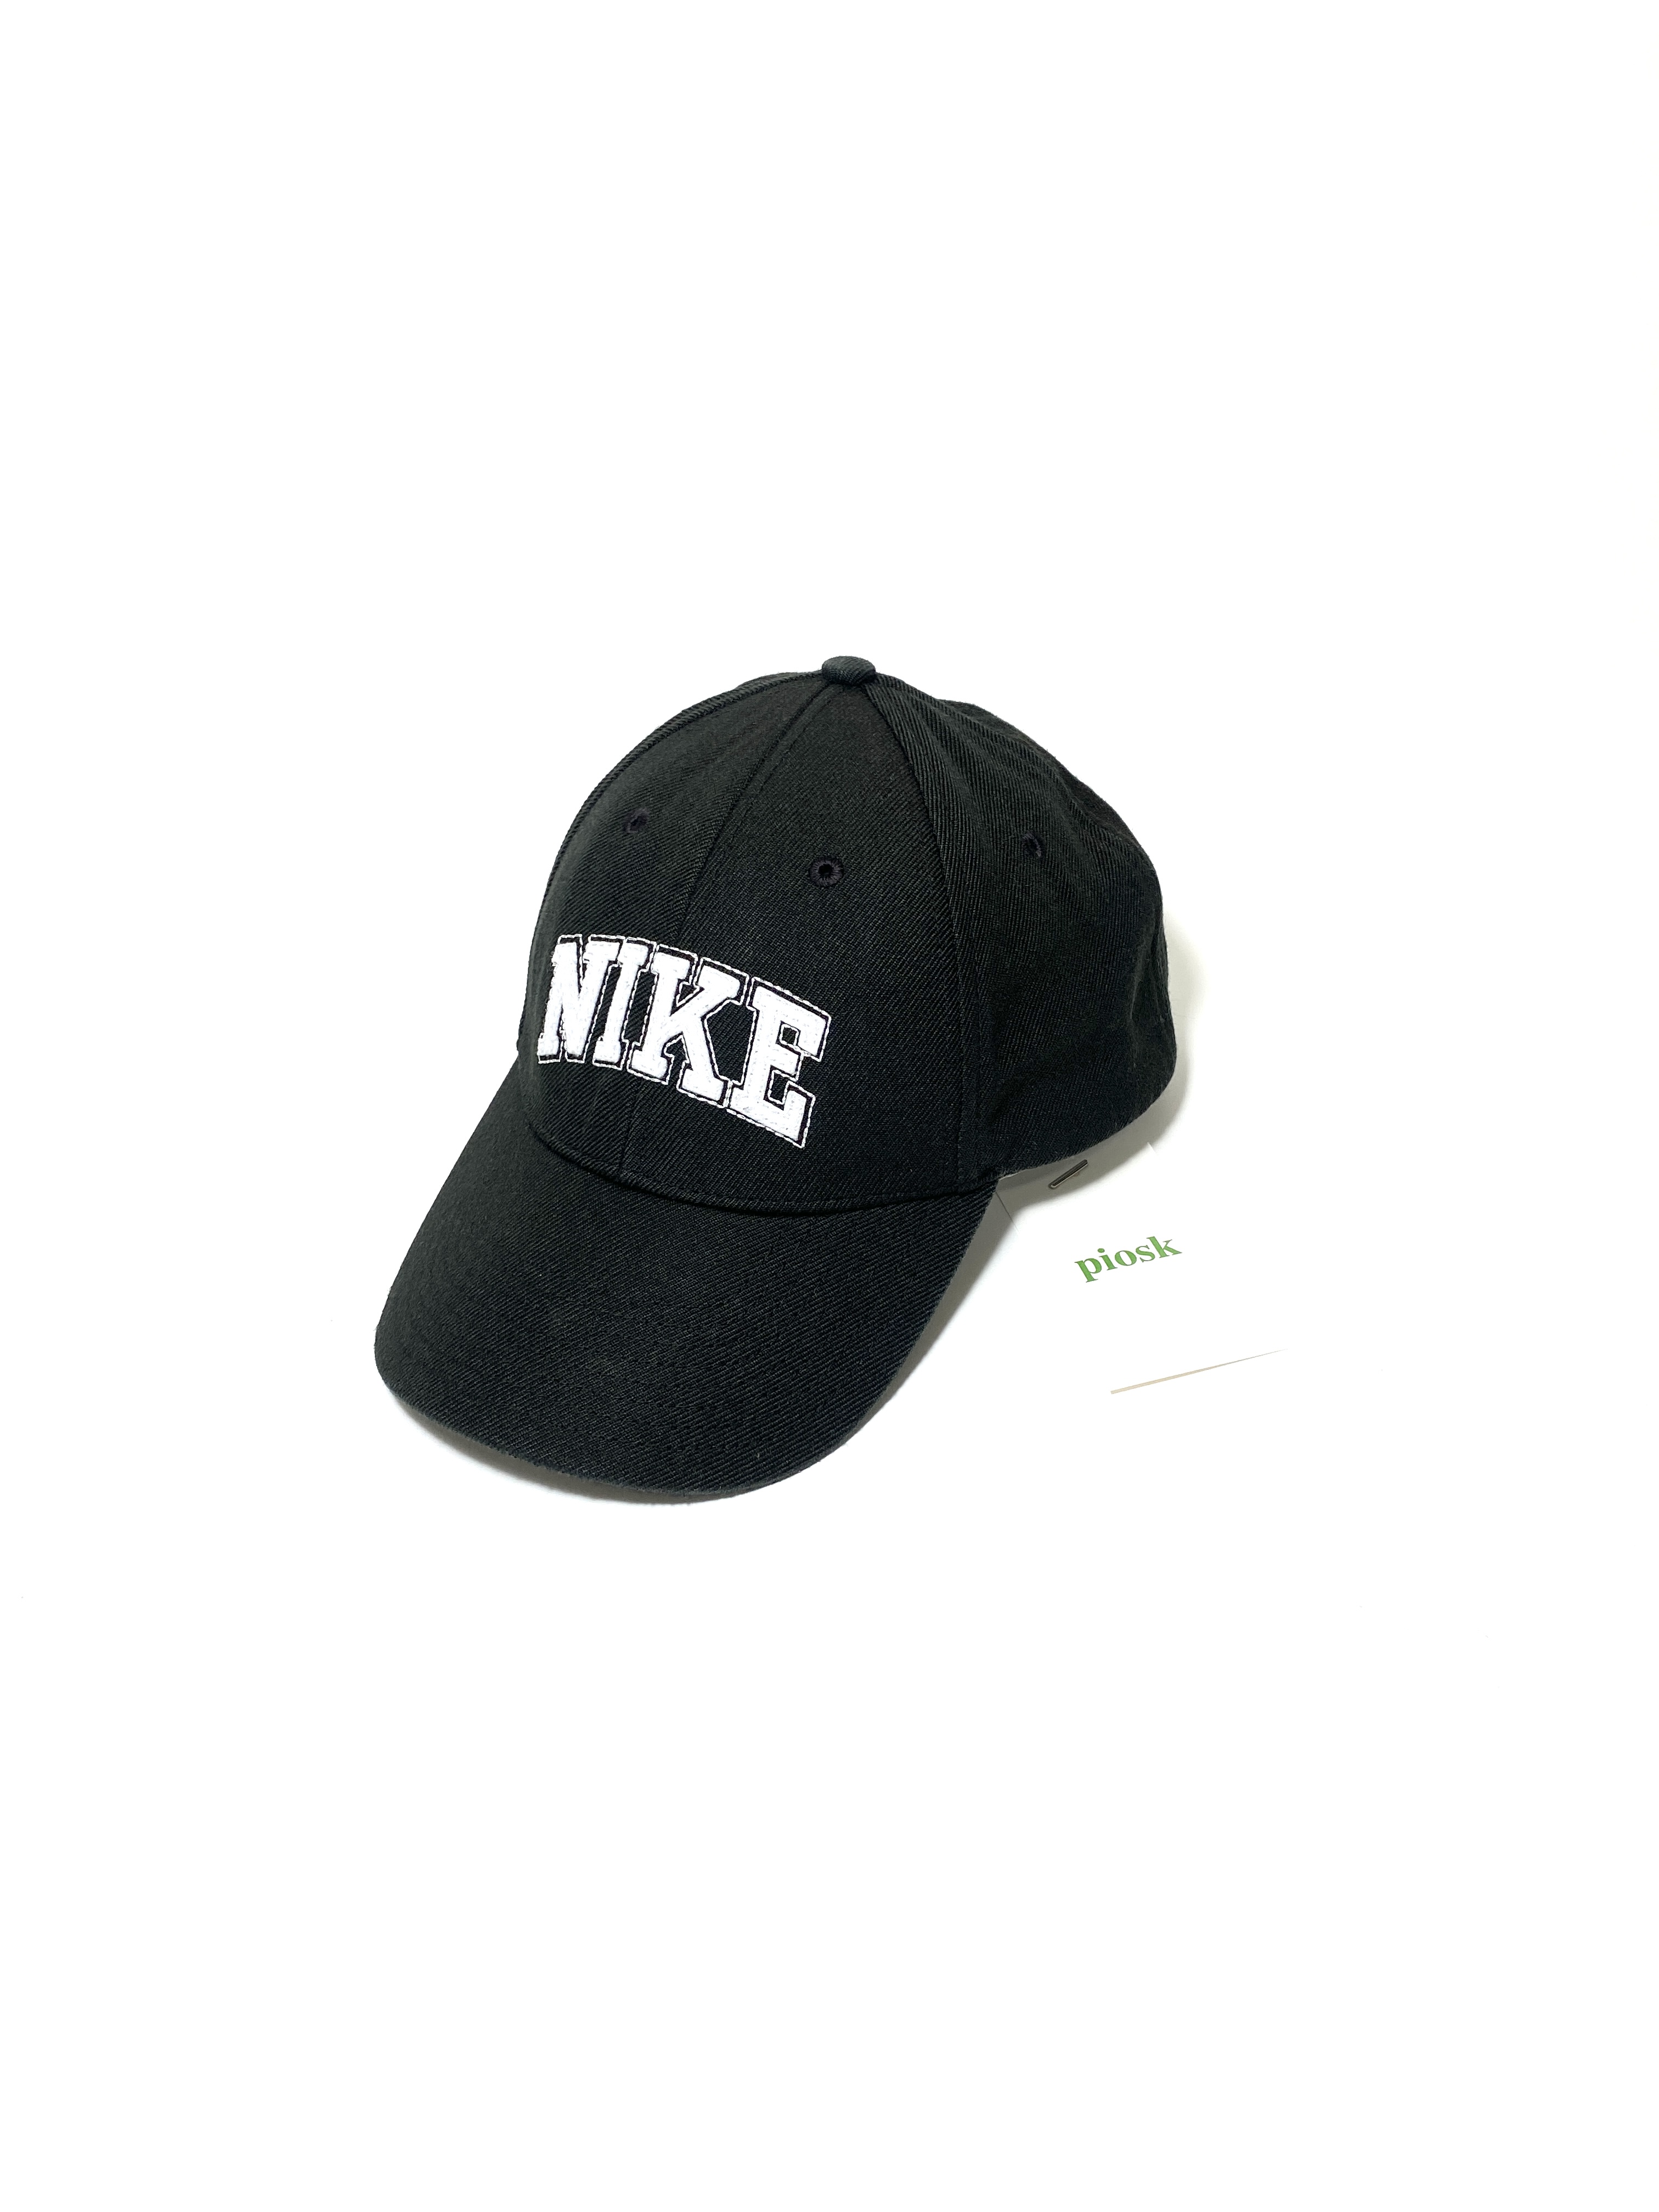 00's nike logo cap (black)